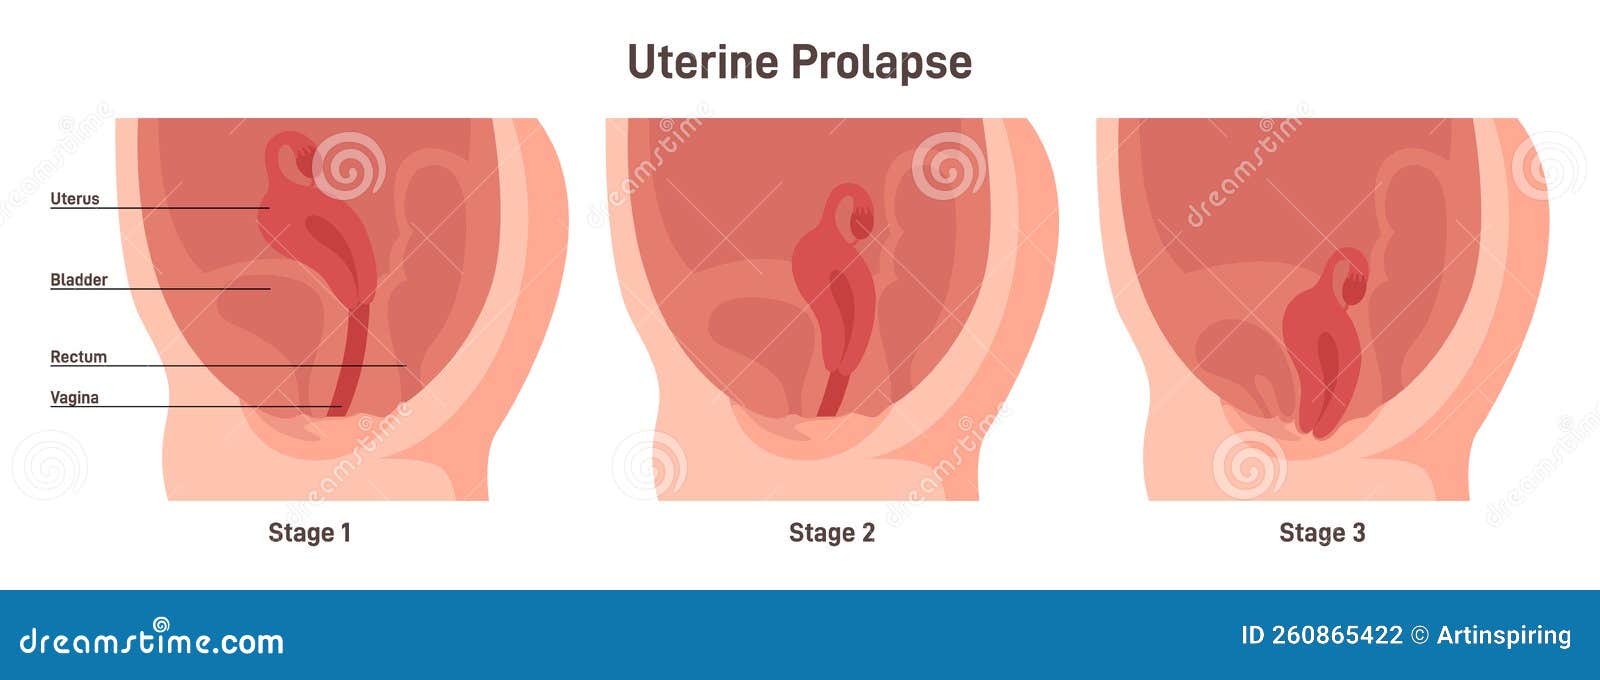 https://thumbs.dreamstime.com/z/stages-uterine-prolapse-pelvic-floor-muscles-weakening-support-uterus-loss-flat-vector-illustration-260865422.jpg